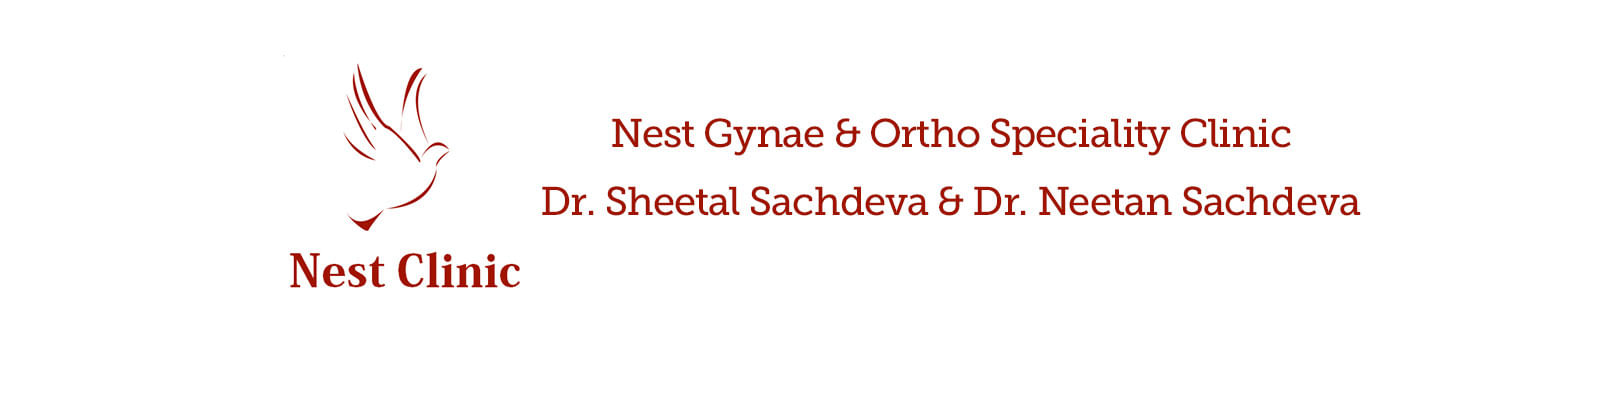 Nest Gynae & Ortho Speciality Clinic